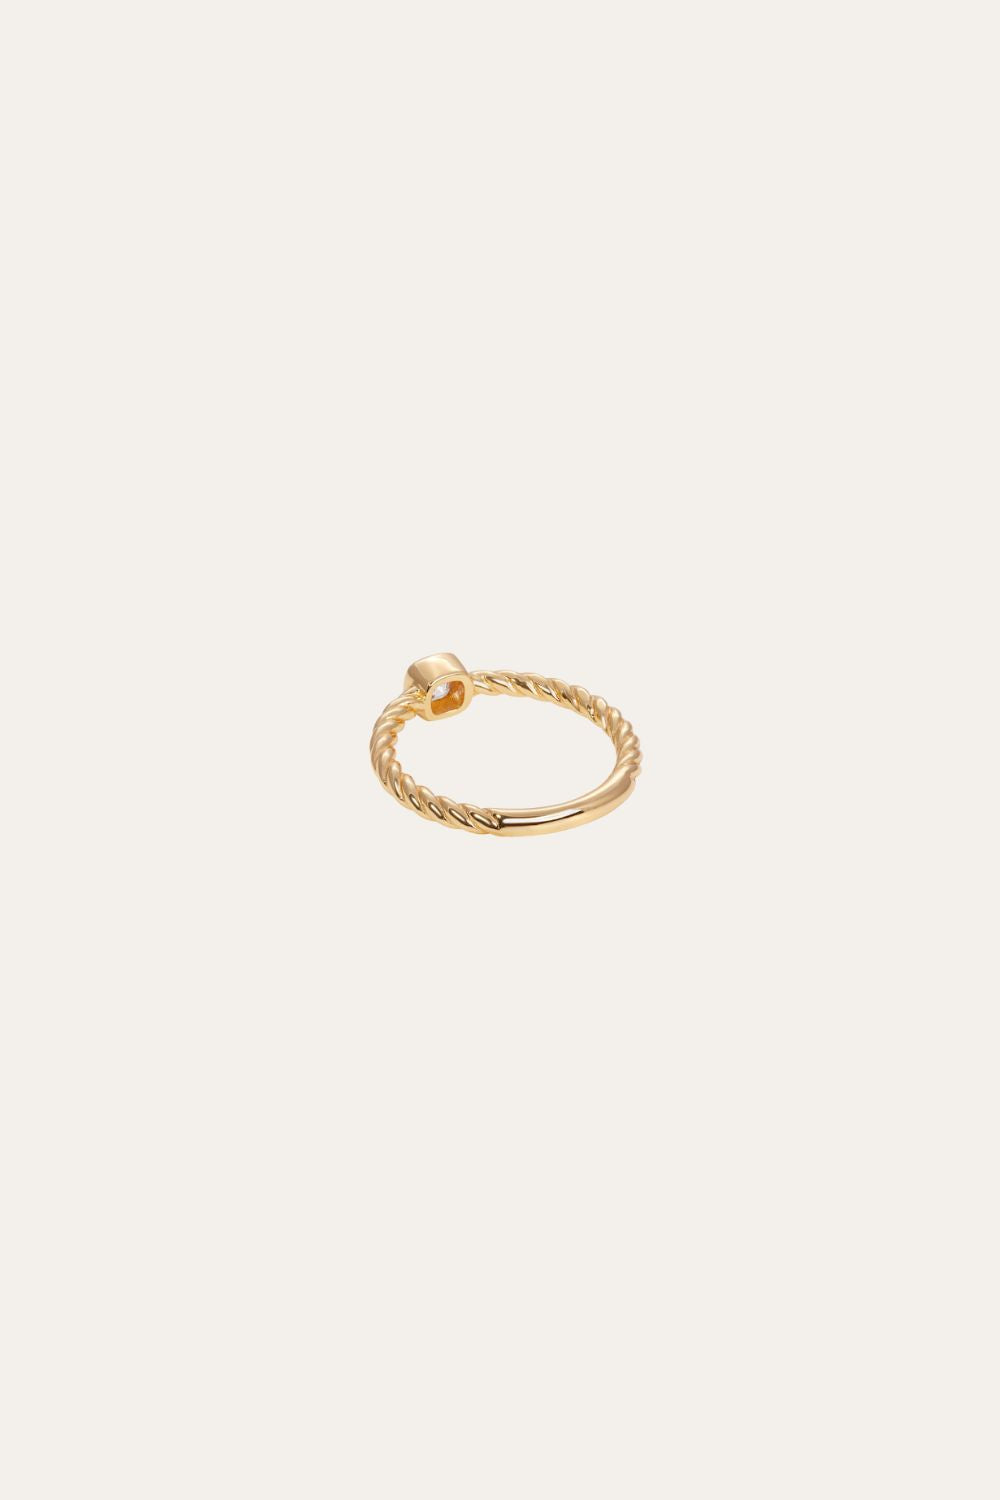 Speira square cz gold vermeil ring